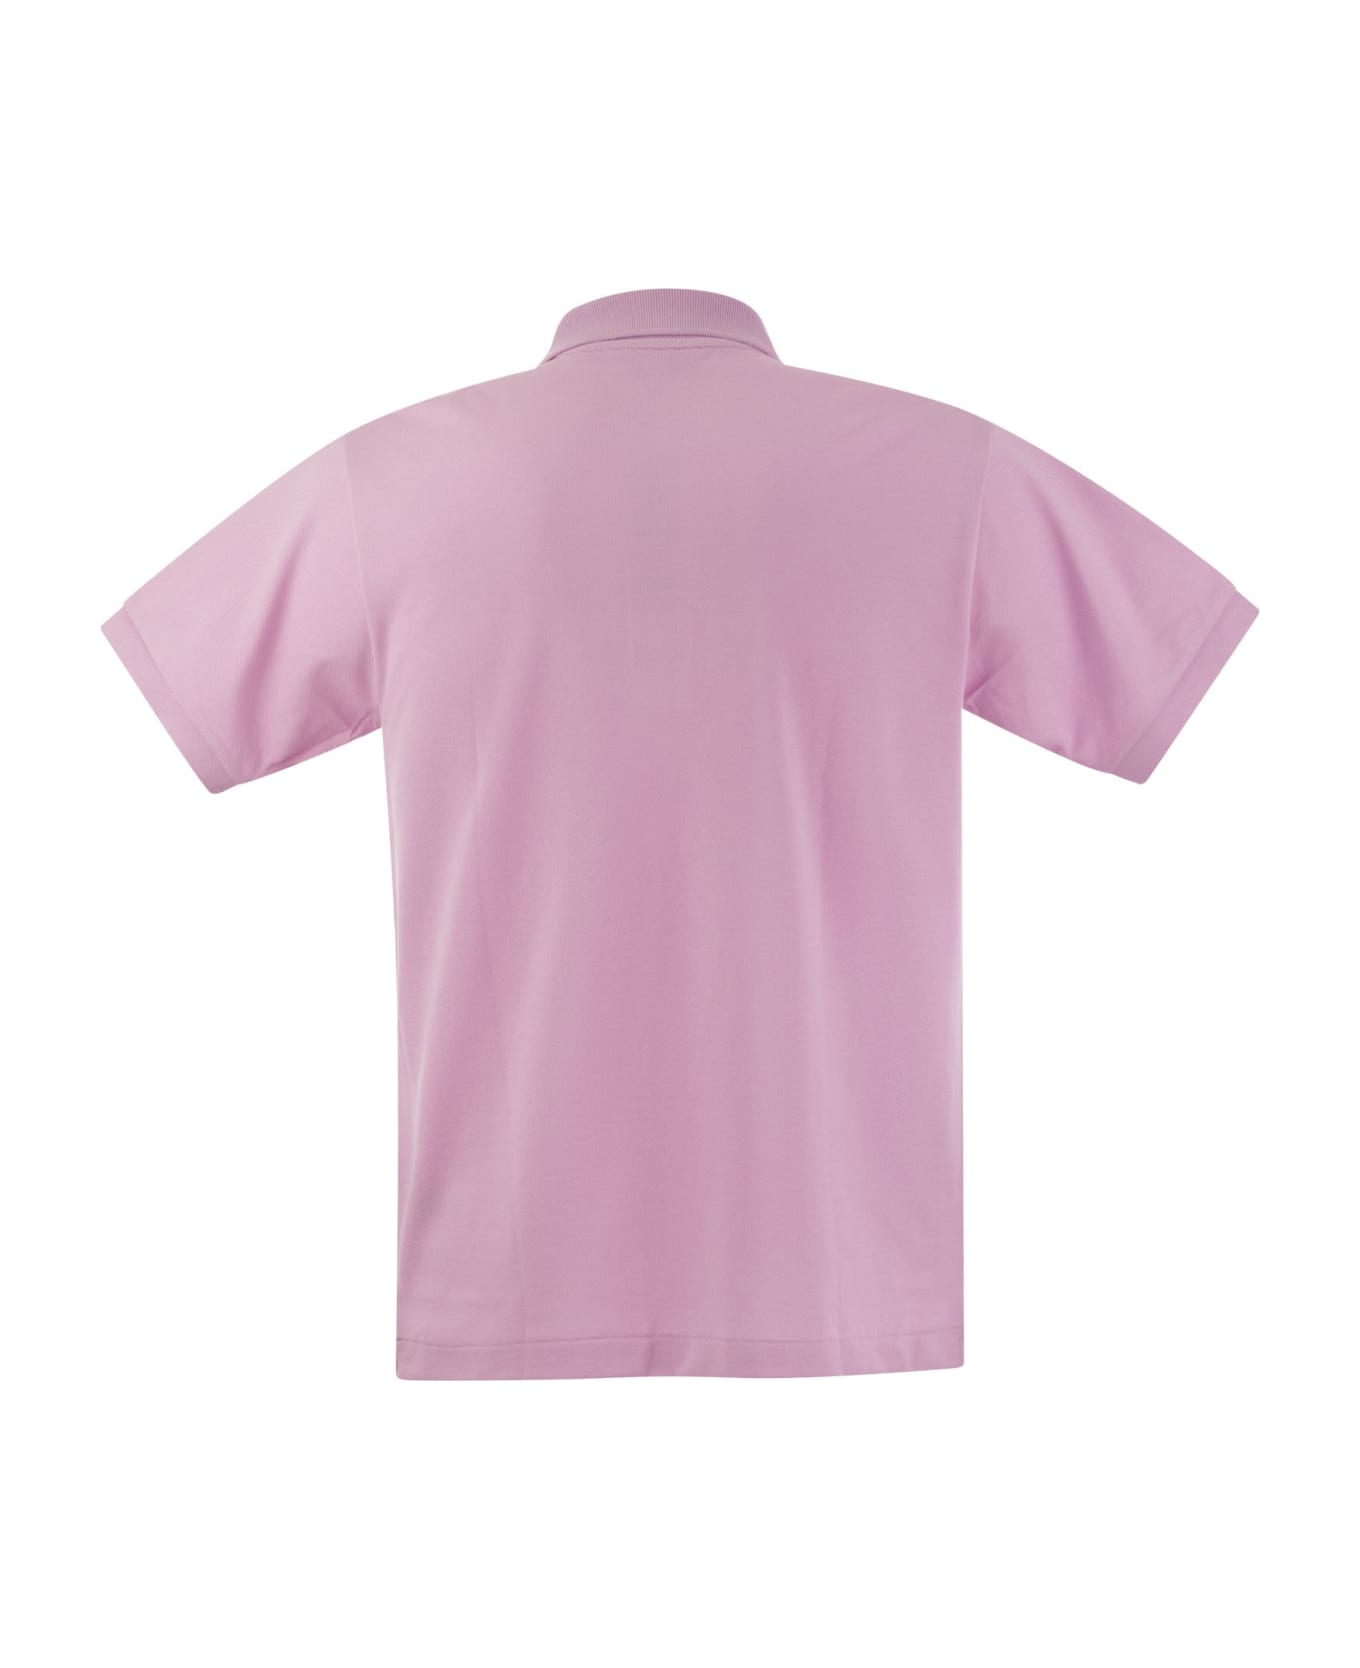 Lacoste Classic Fit Cotton Pique Polo Shirt - Pink ポロシャツ